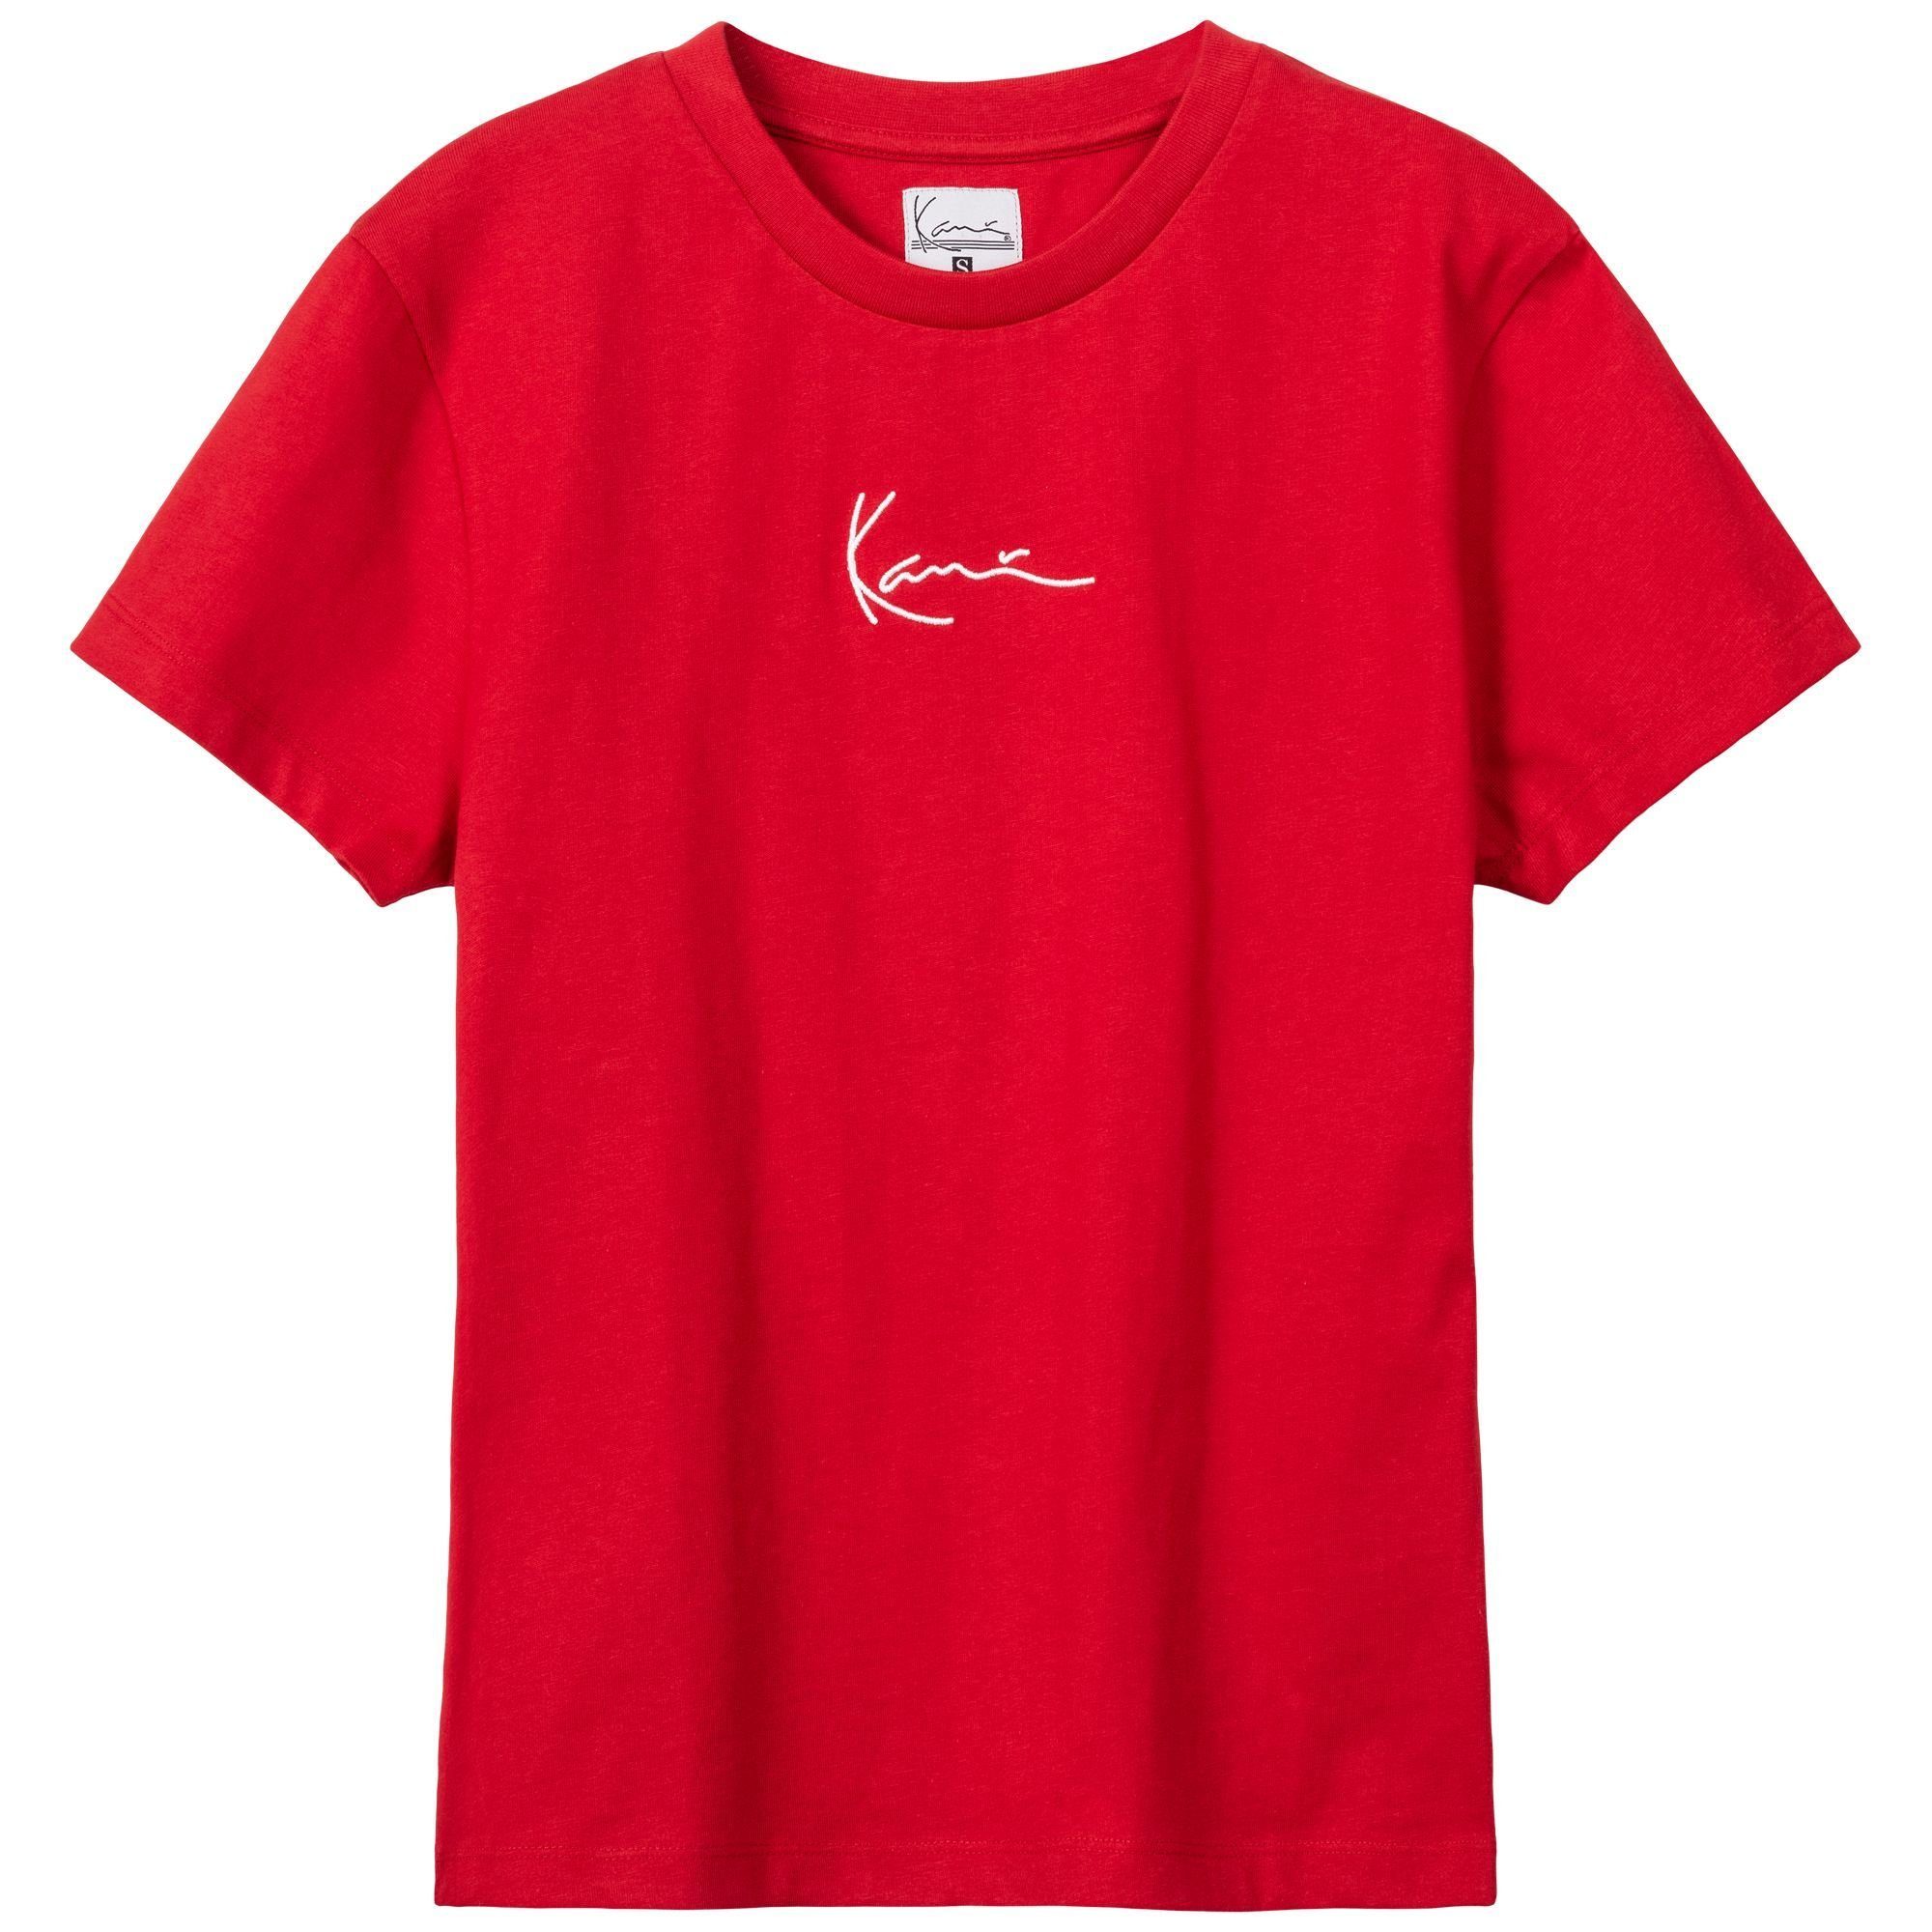 Karl Kani T-Shirt KK Small Signature online kaufen | OTTO